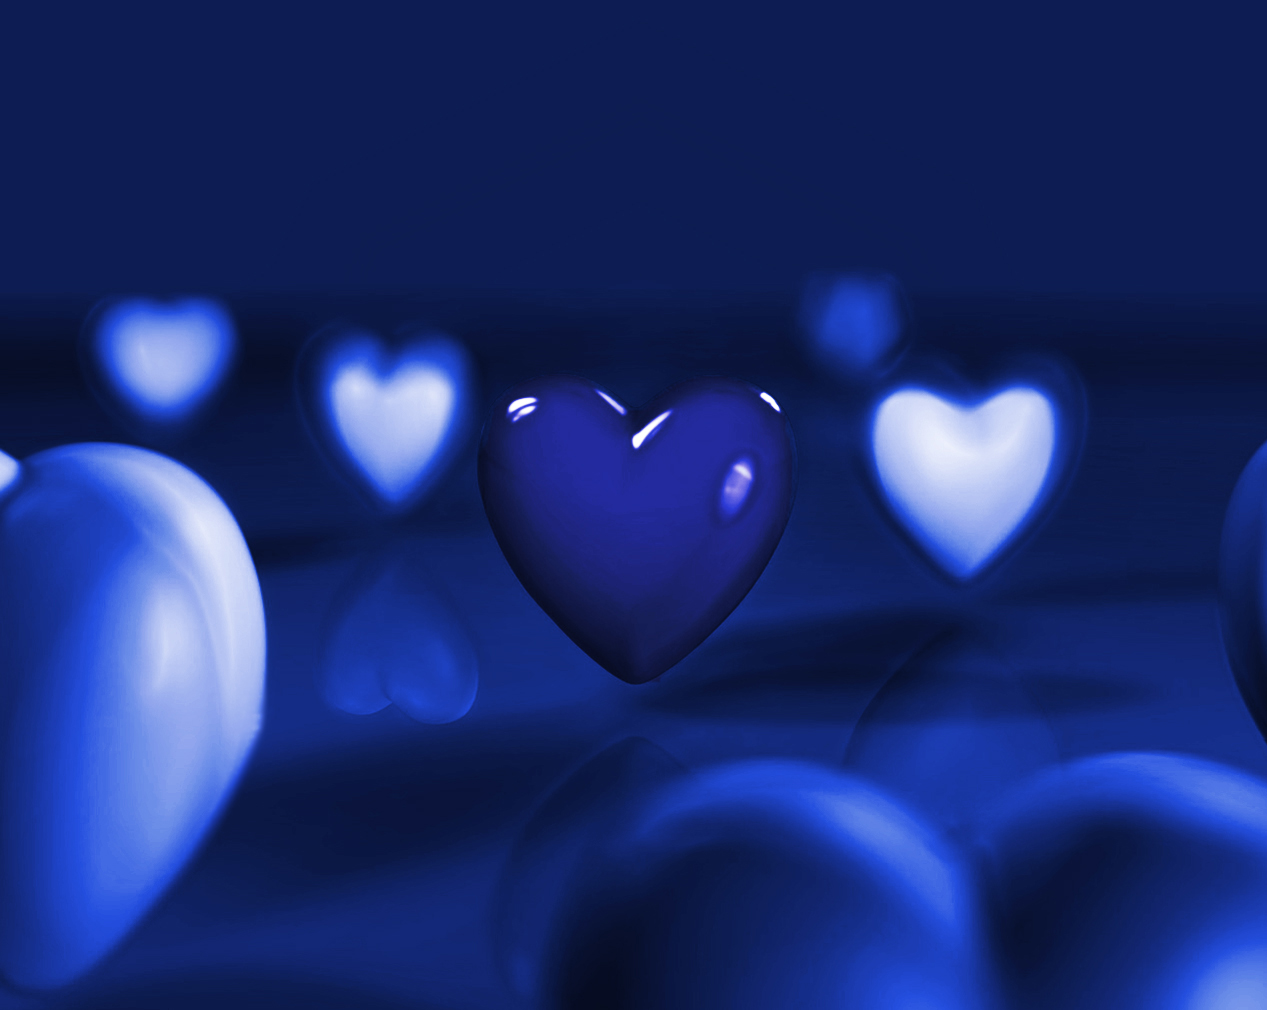 66+] Blue Heart Wallpaper - WallpaperSafari